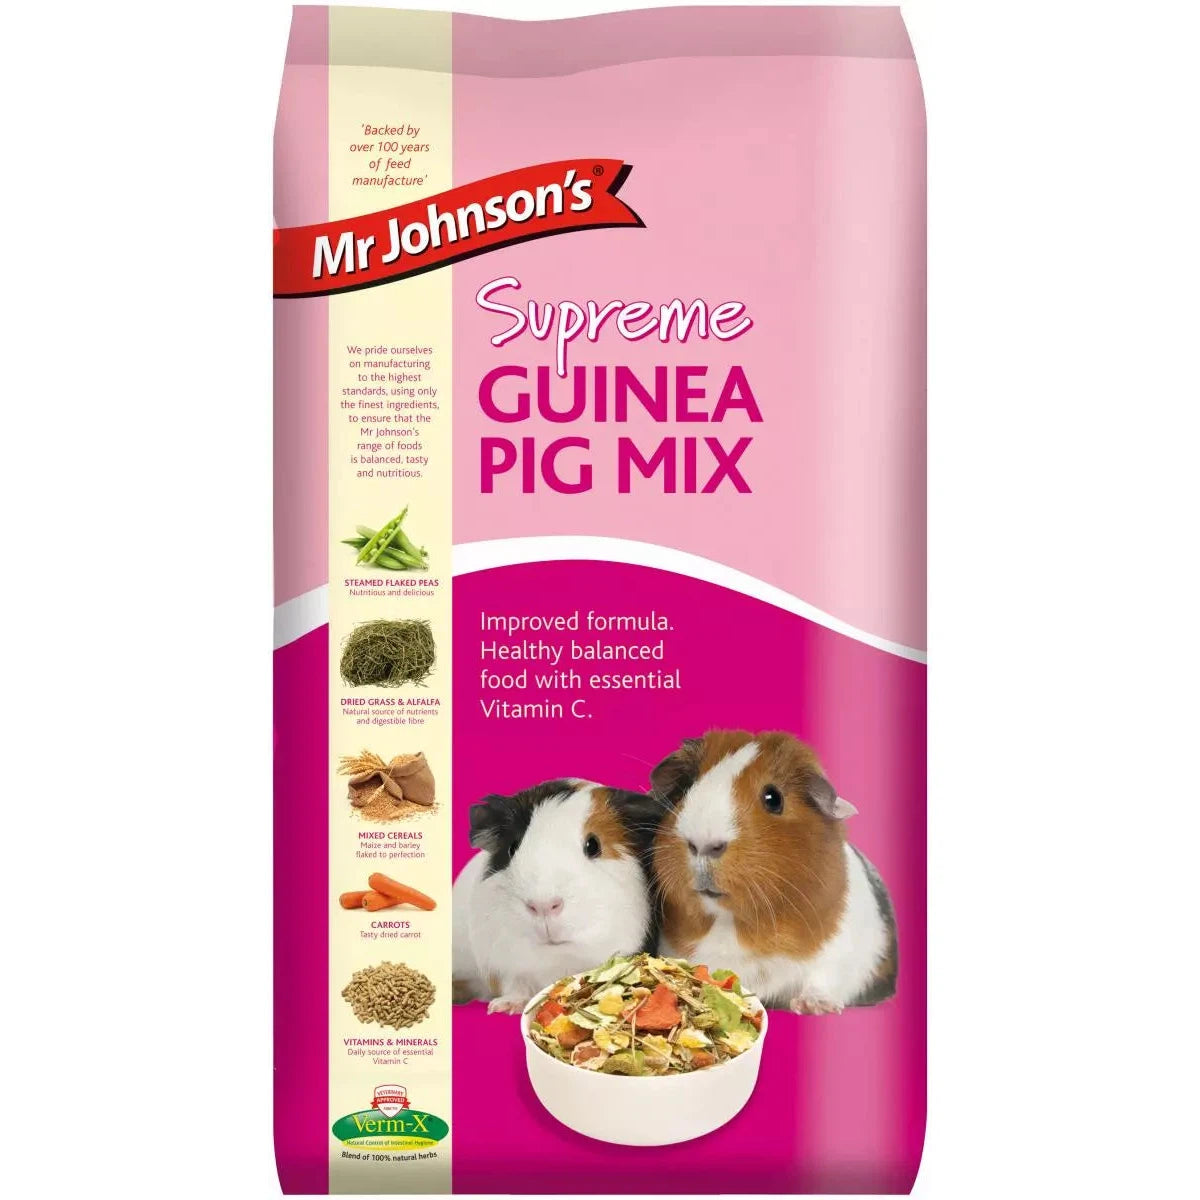 Mr Johnson's Supreme Guinea Pig Mix Guinea Pig Food Barnstaple Equestrian Supplies